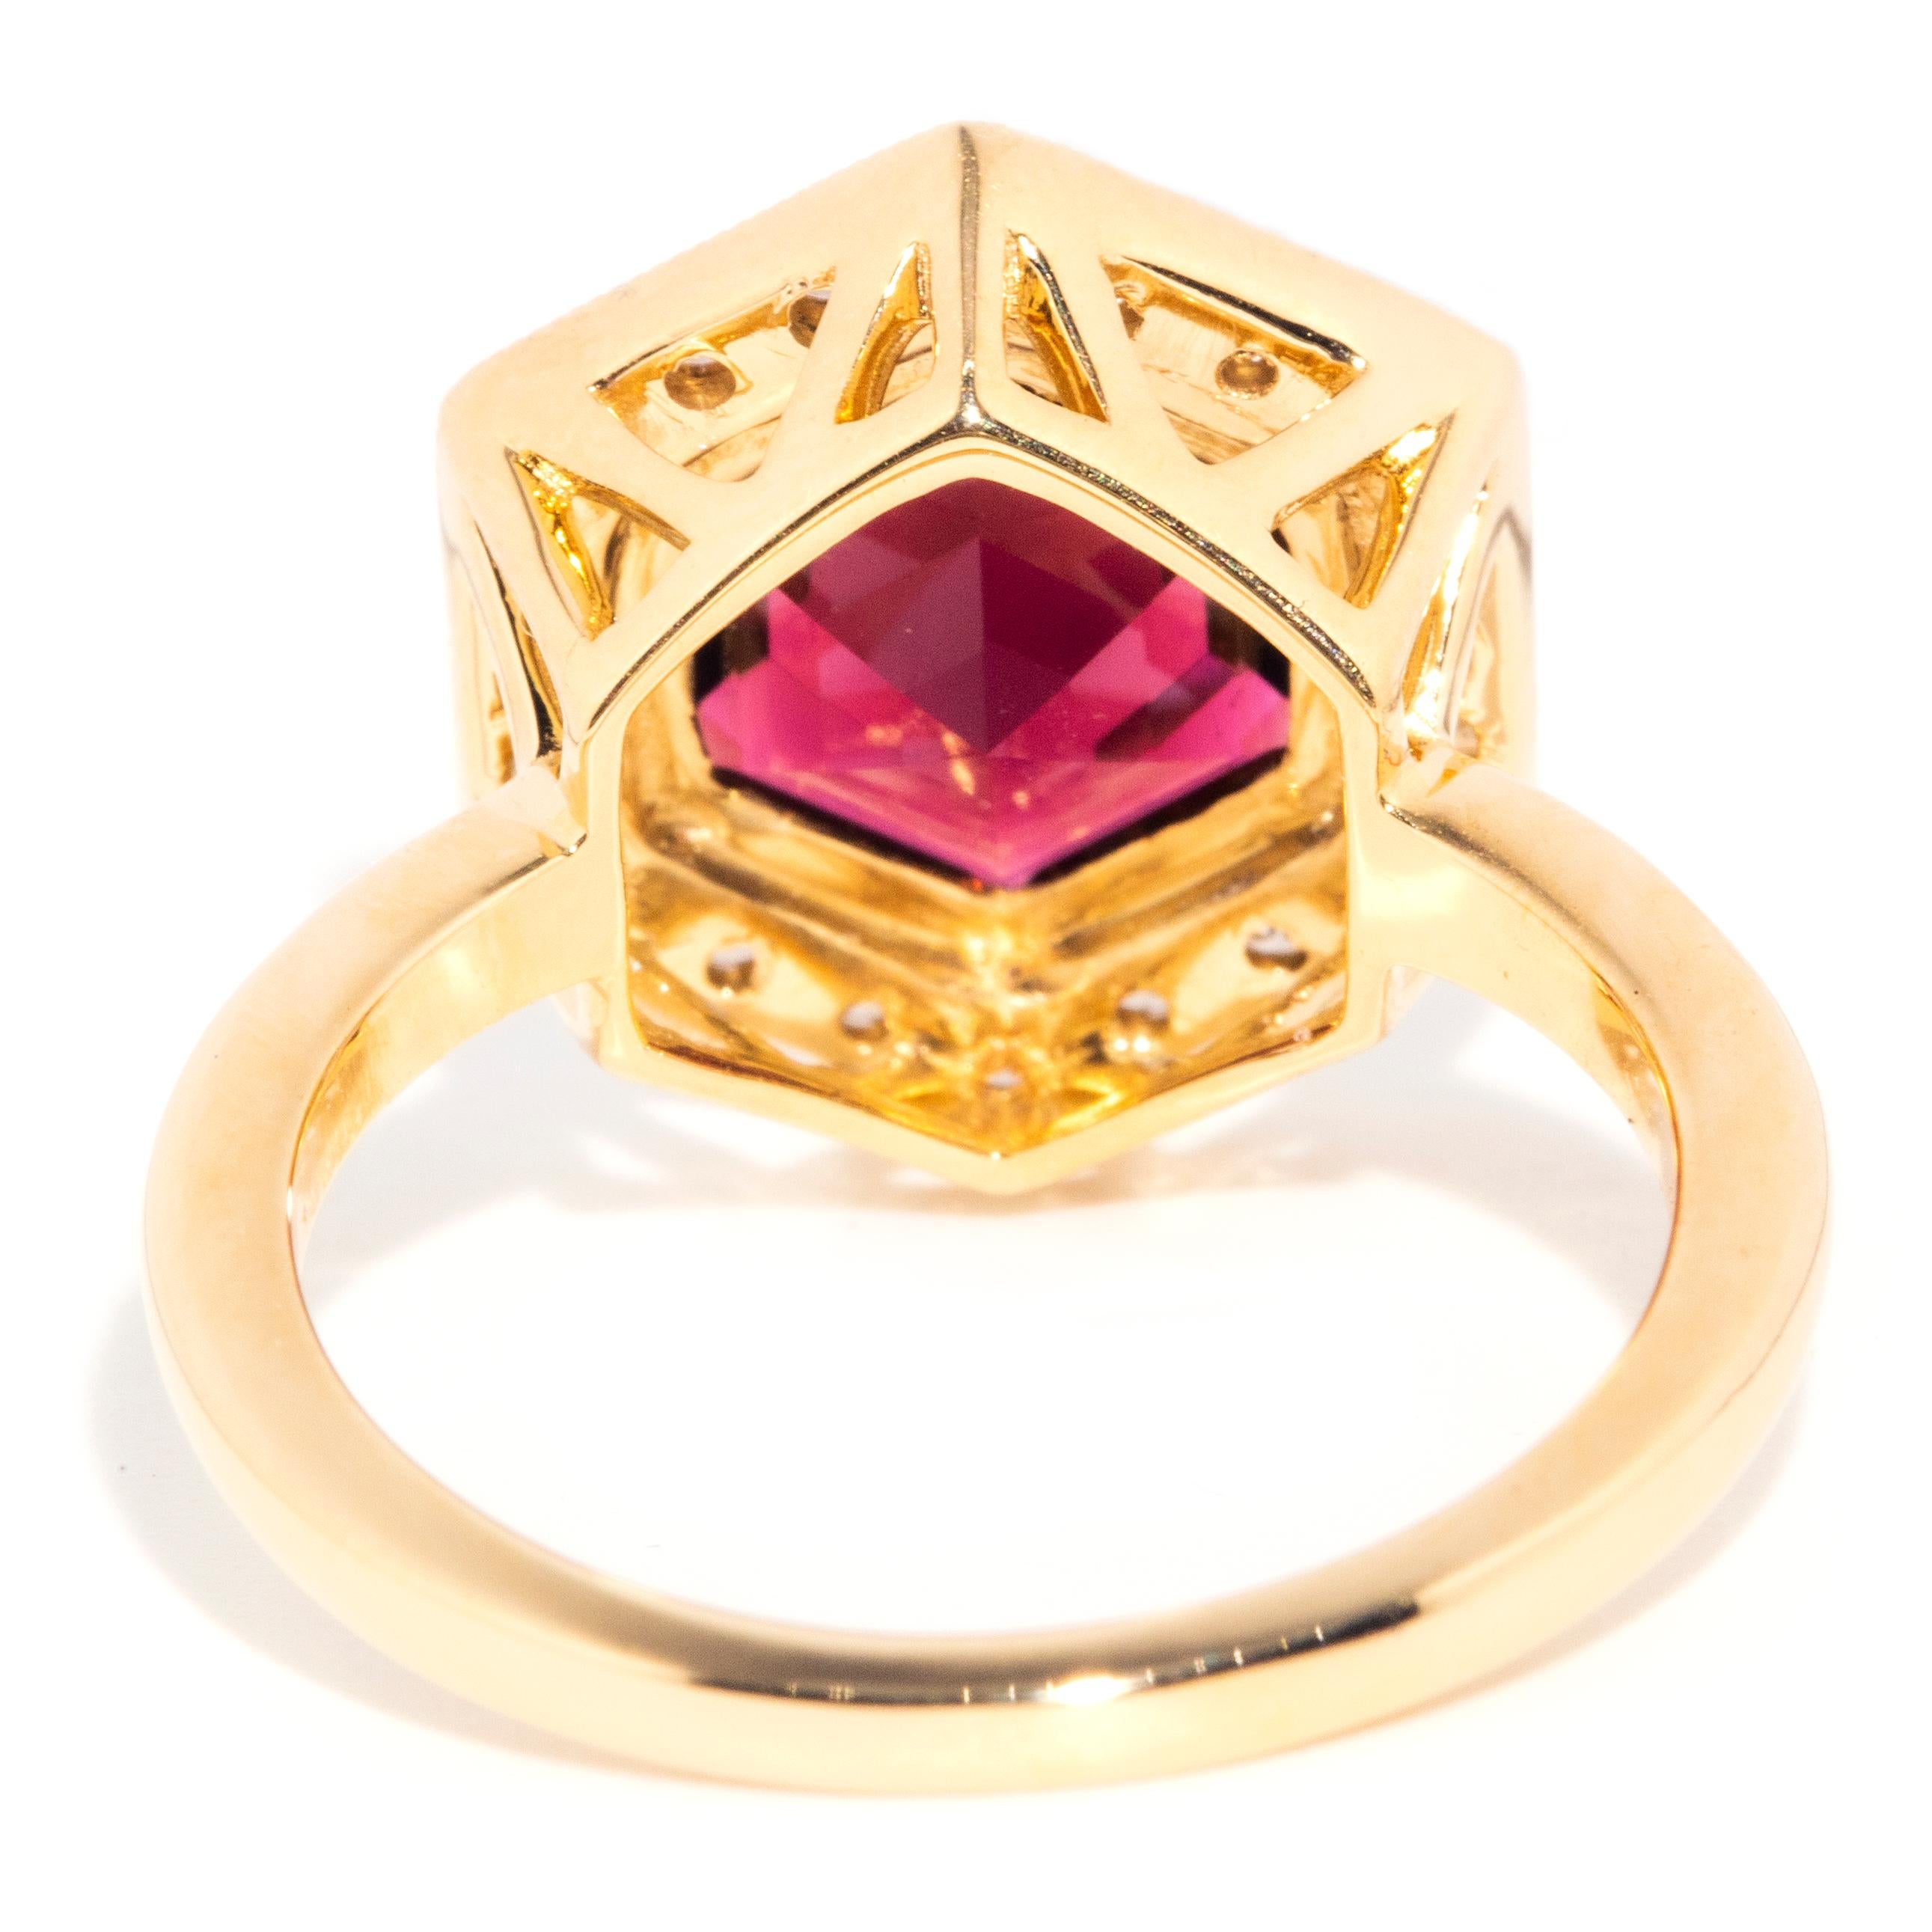 Contemporary 18 Carat Yellow Gold Reddish-Purple Tourmaline and Diamond Ring For Sale 1